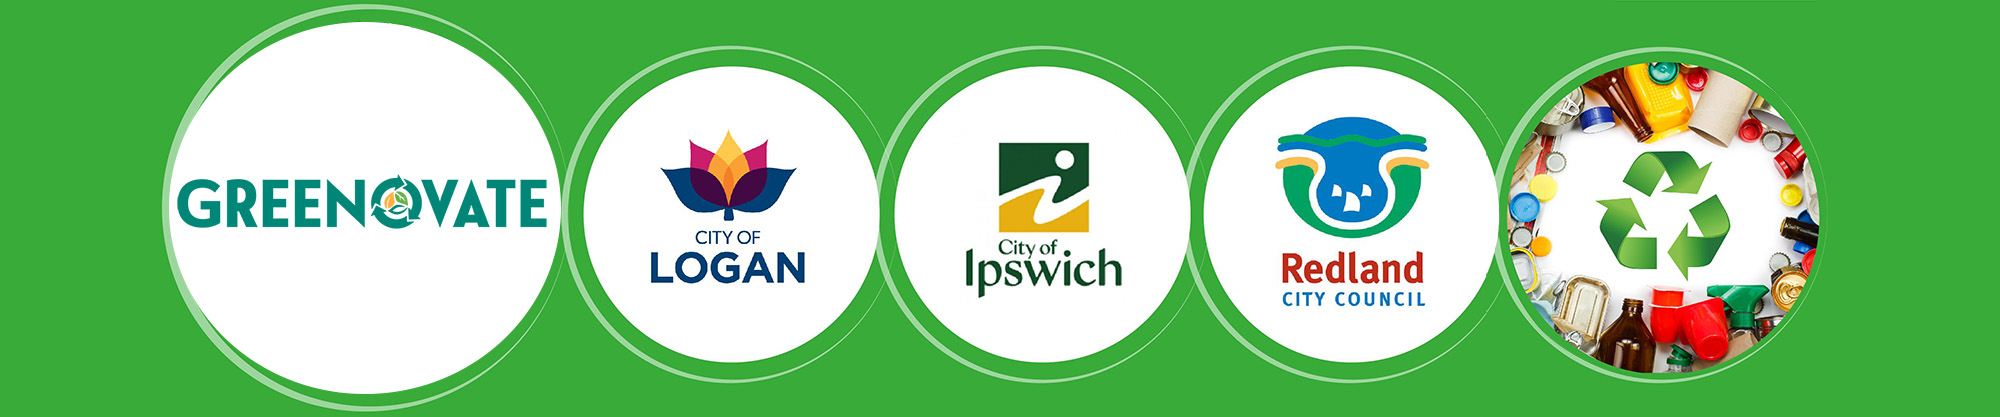 Logan City Council logo, City of Ipswich logo, Redland City Council logo and Greenovate logo